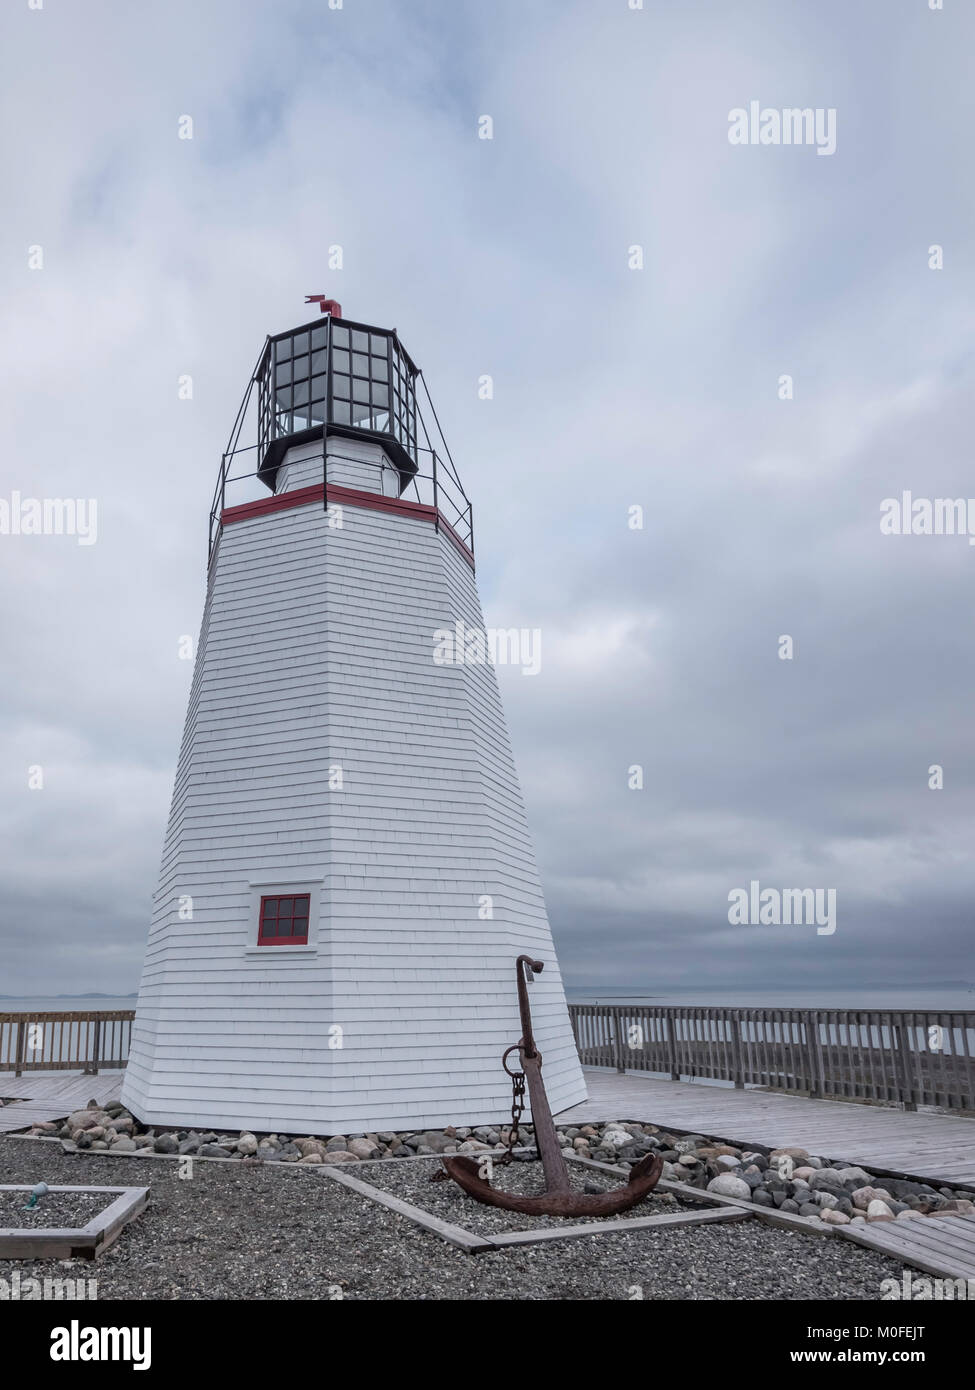 St. Andrews, New Brunswick/Kanada - Oktober 9, 2016: pendlebury Leuchtturm ist das älteste erhaltene Festland Leuchtturm in New Brunswick. Stockfoto